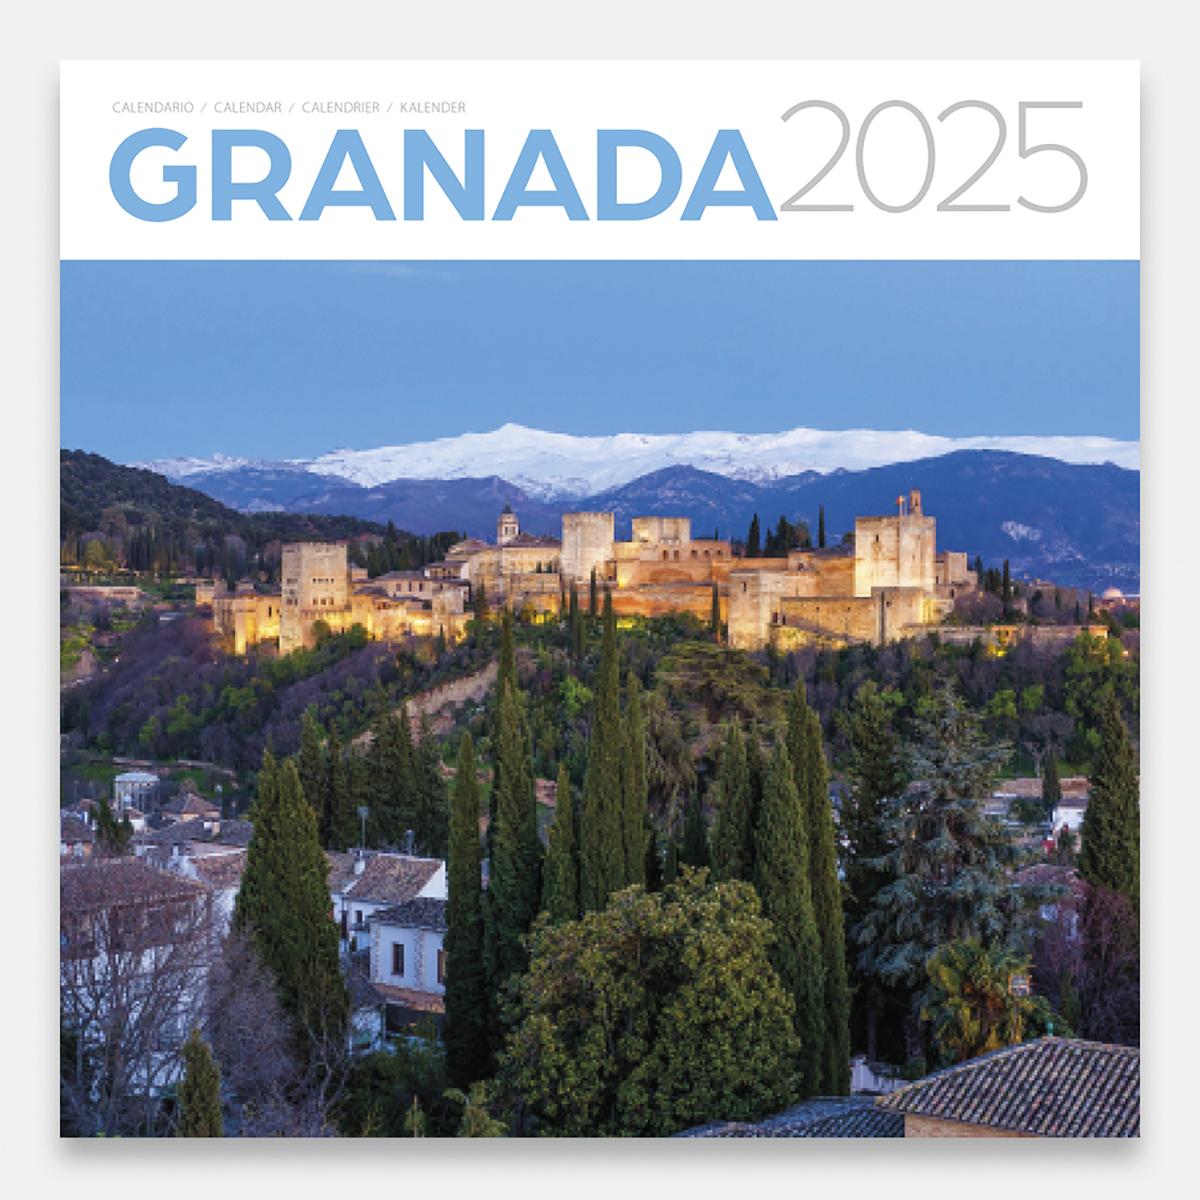 Calendar 2025 Granada and Alhambra 25grg calendario pared 2025 granada